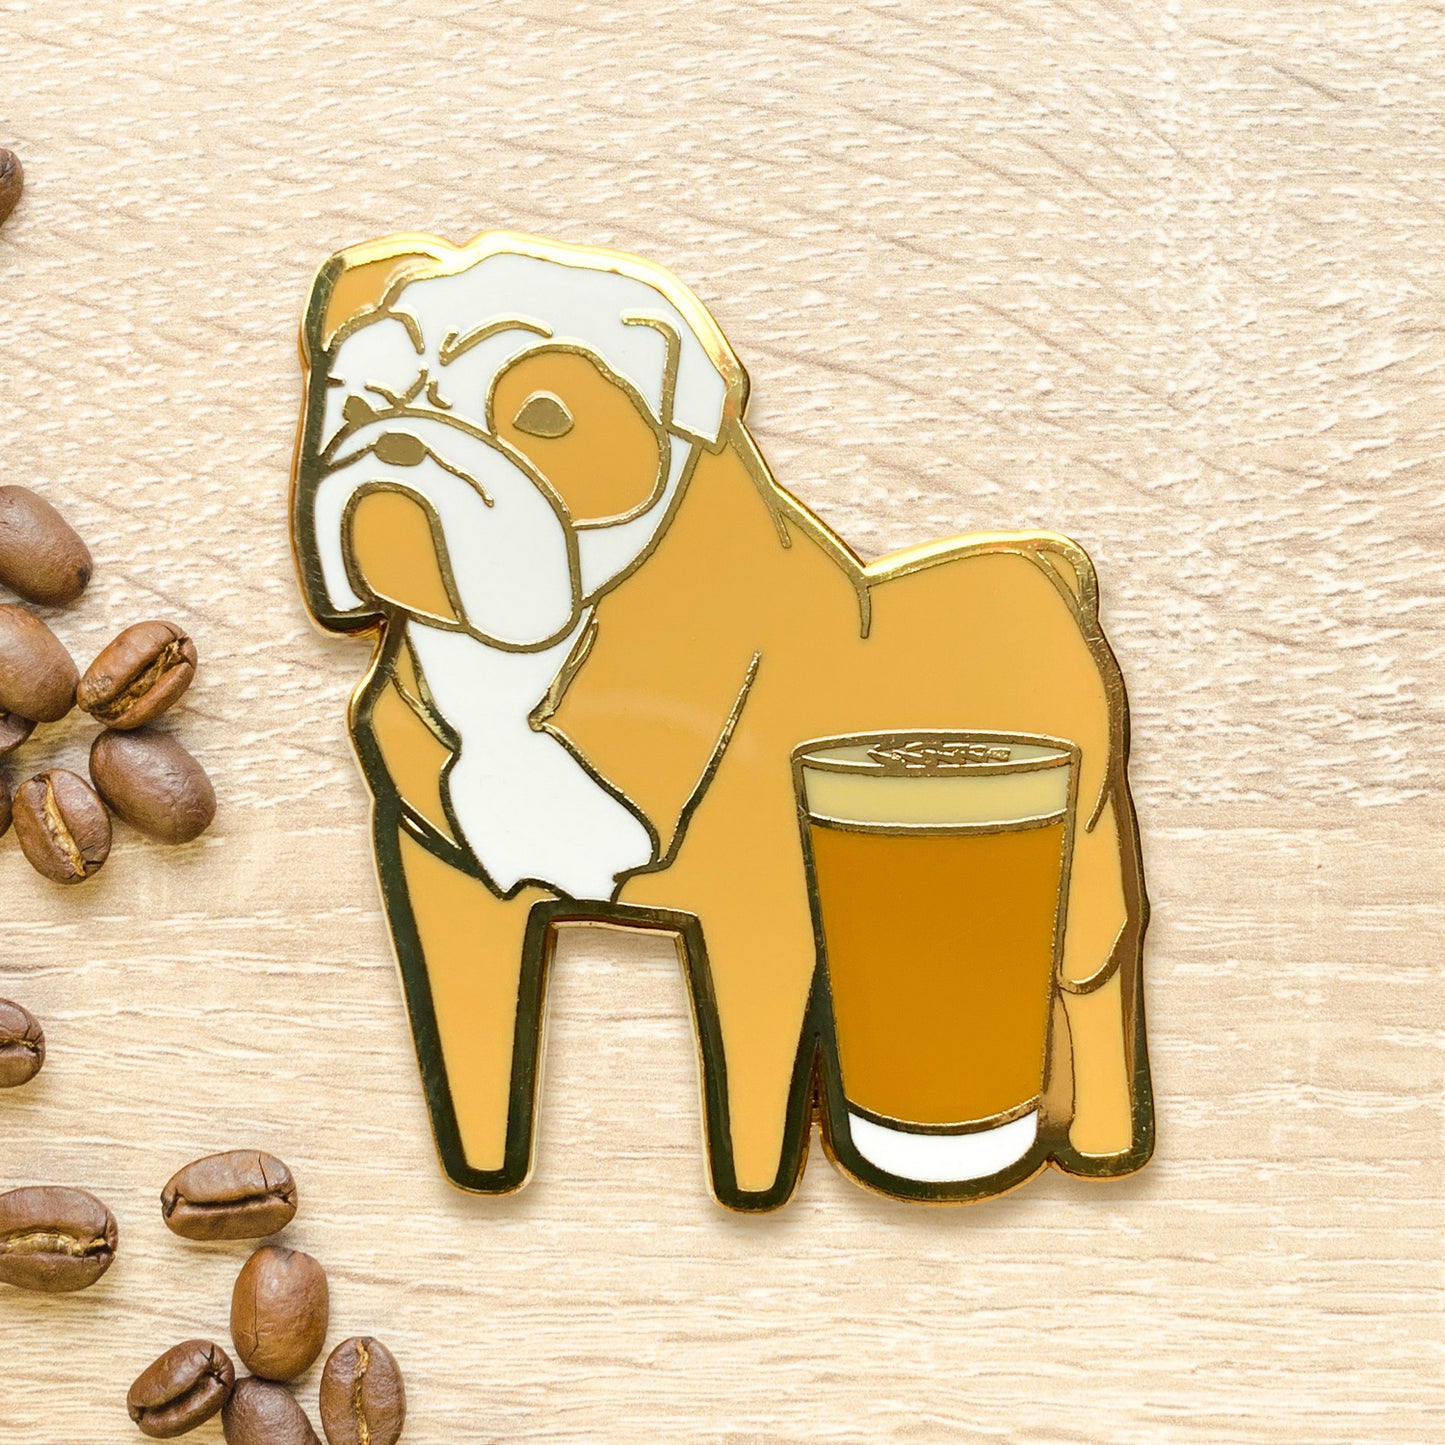 Bulldog & Latte Coffee Hard Enamel Pin by Cocktail Critters